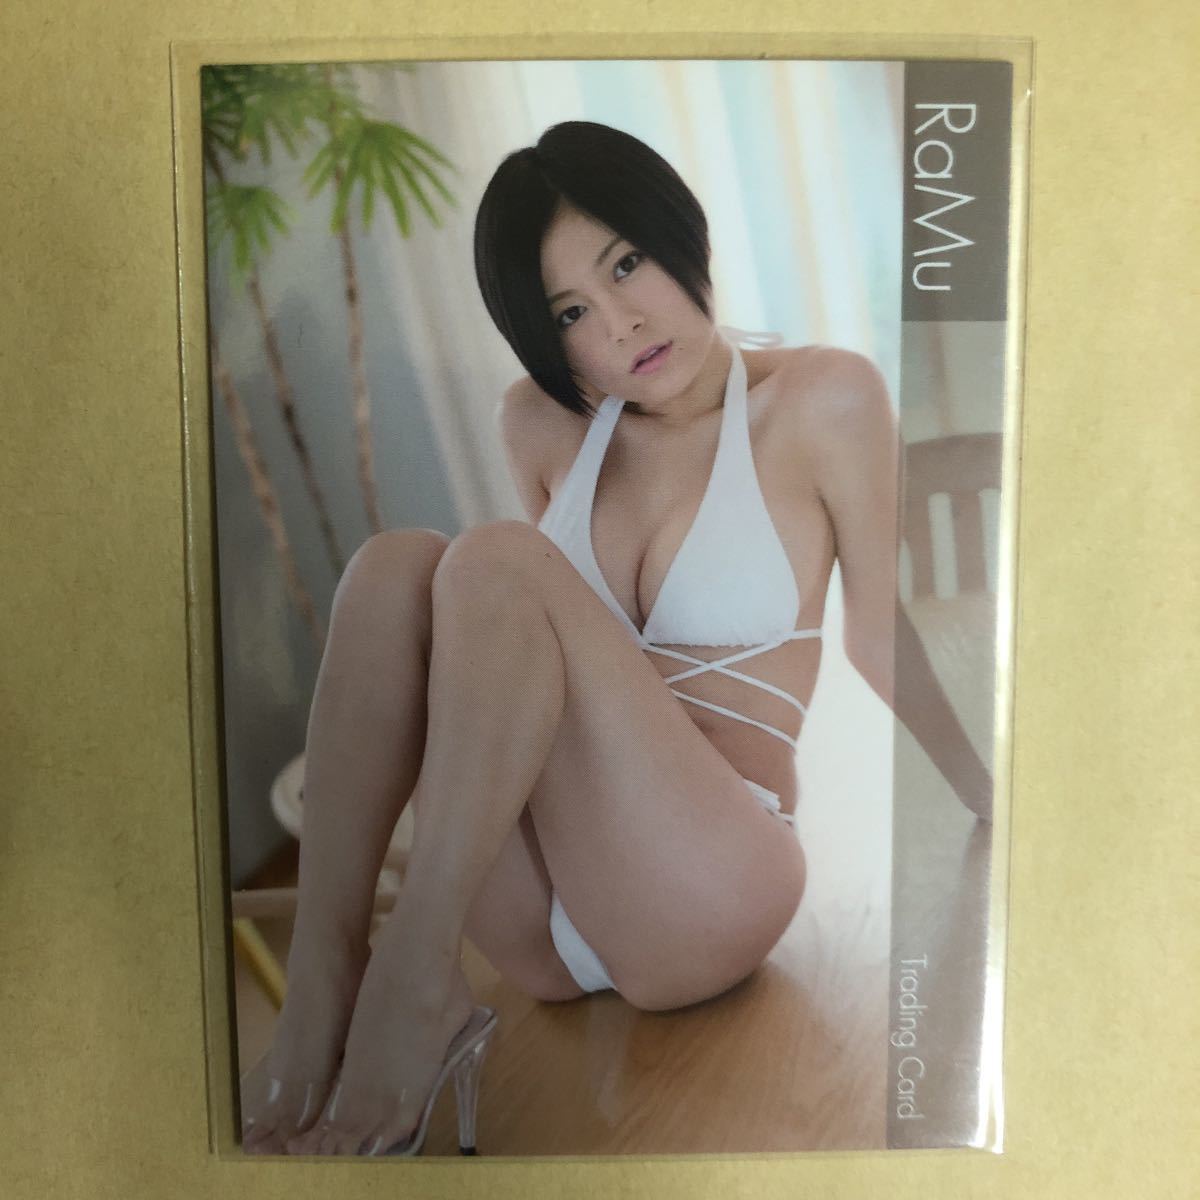 RaMu 2020 trading card idol gravure card swimsuit bikini 044 star trading card 